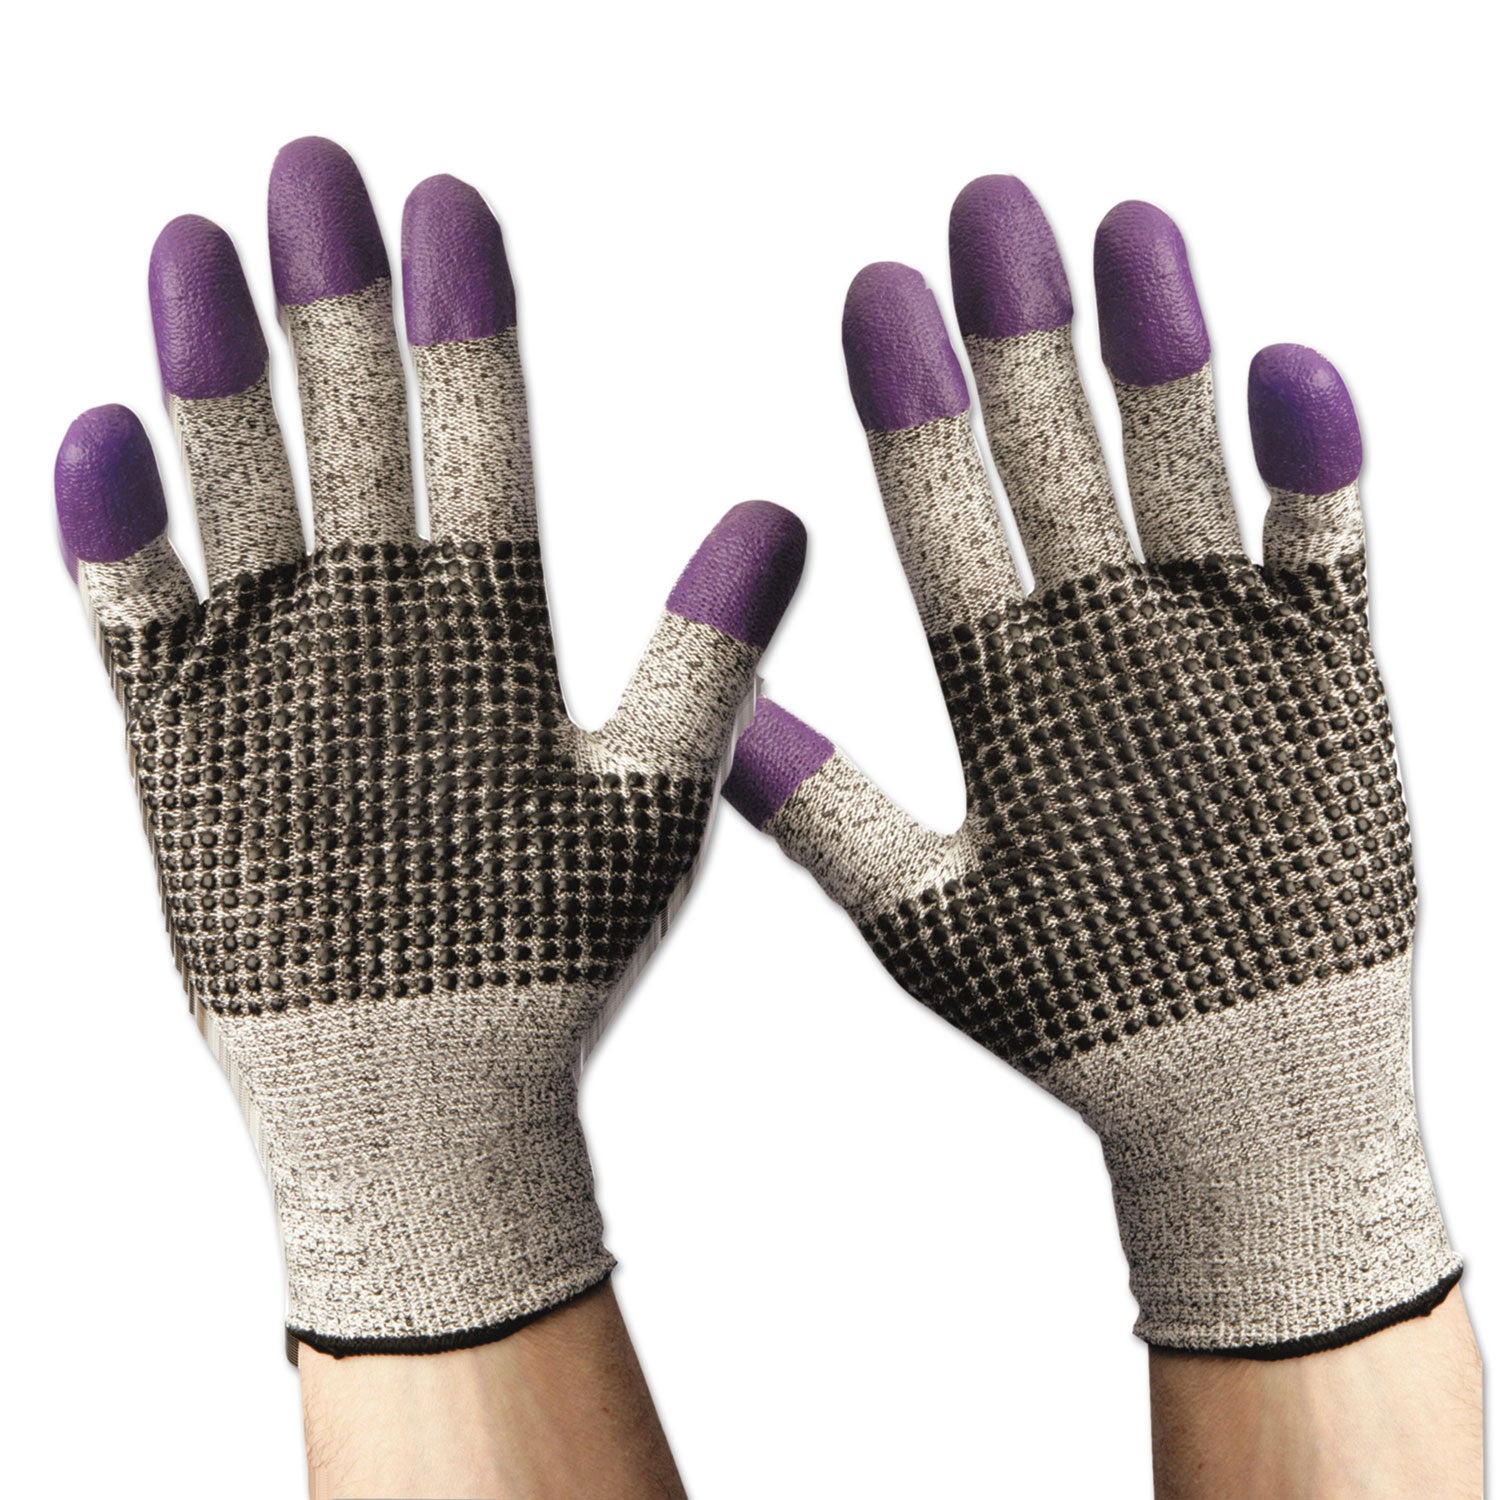 g60-purple-nitrile-gloves-230-mm-length-medium-size-8-black-white-12-pairs-carton_kcc97431ct - 5